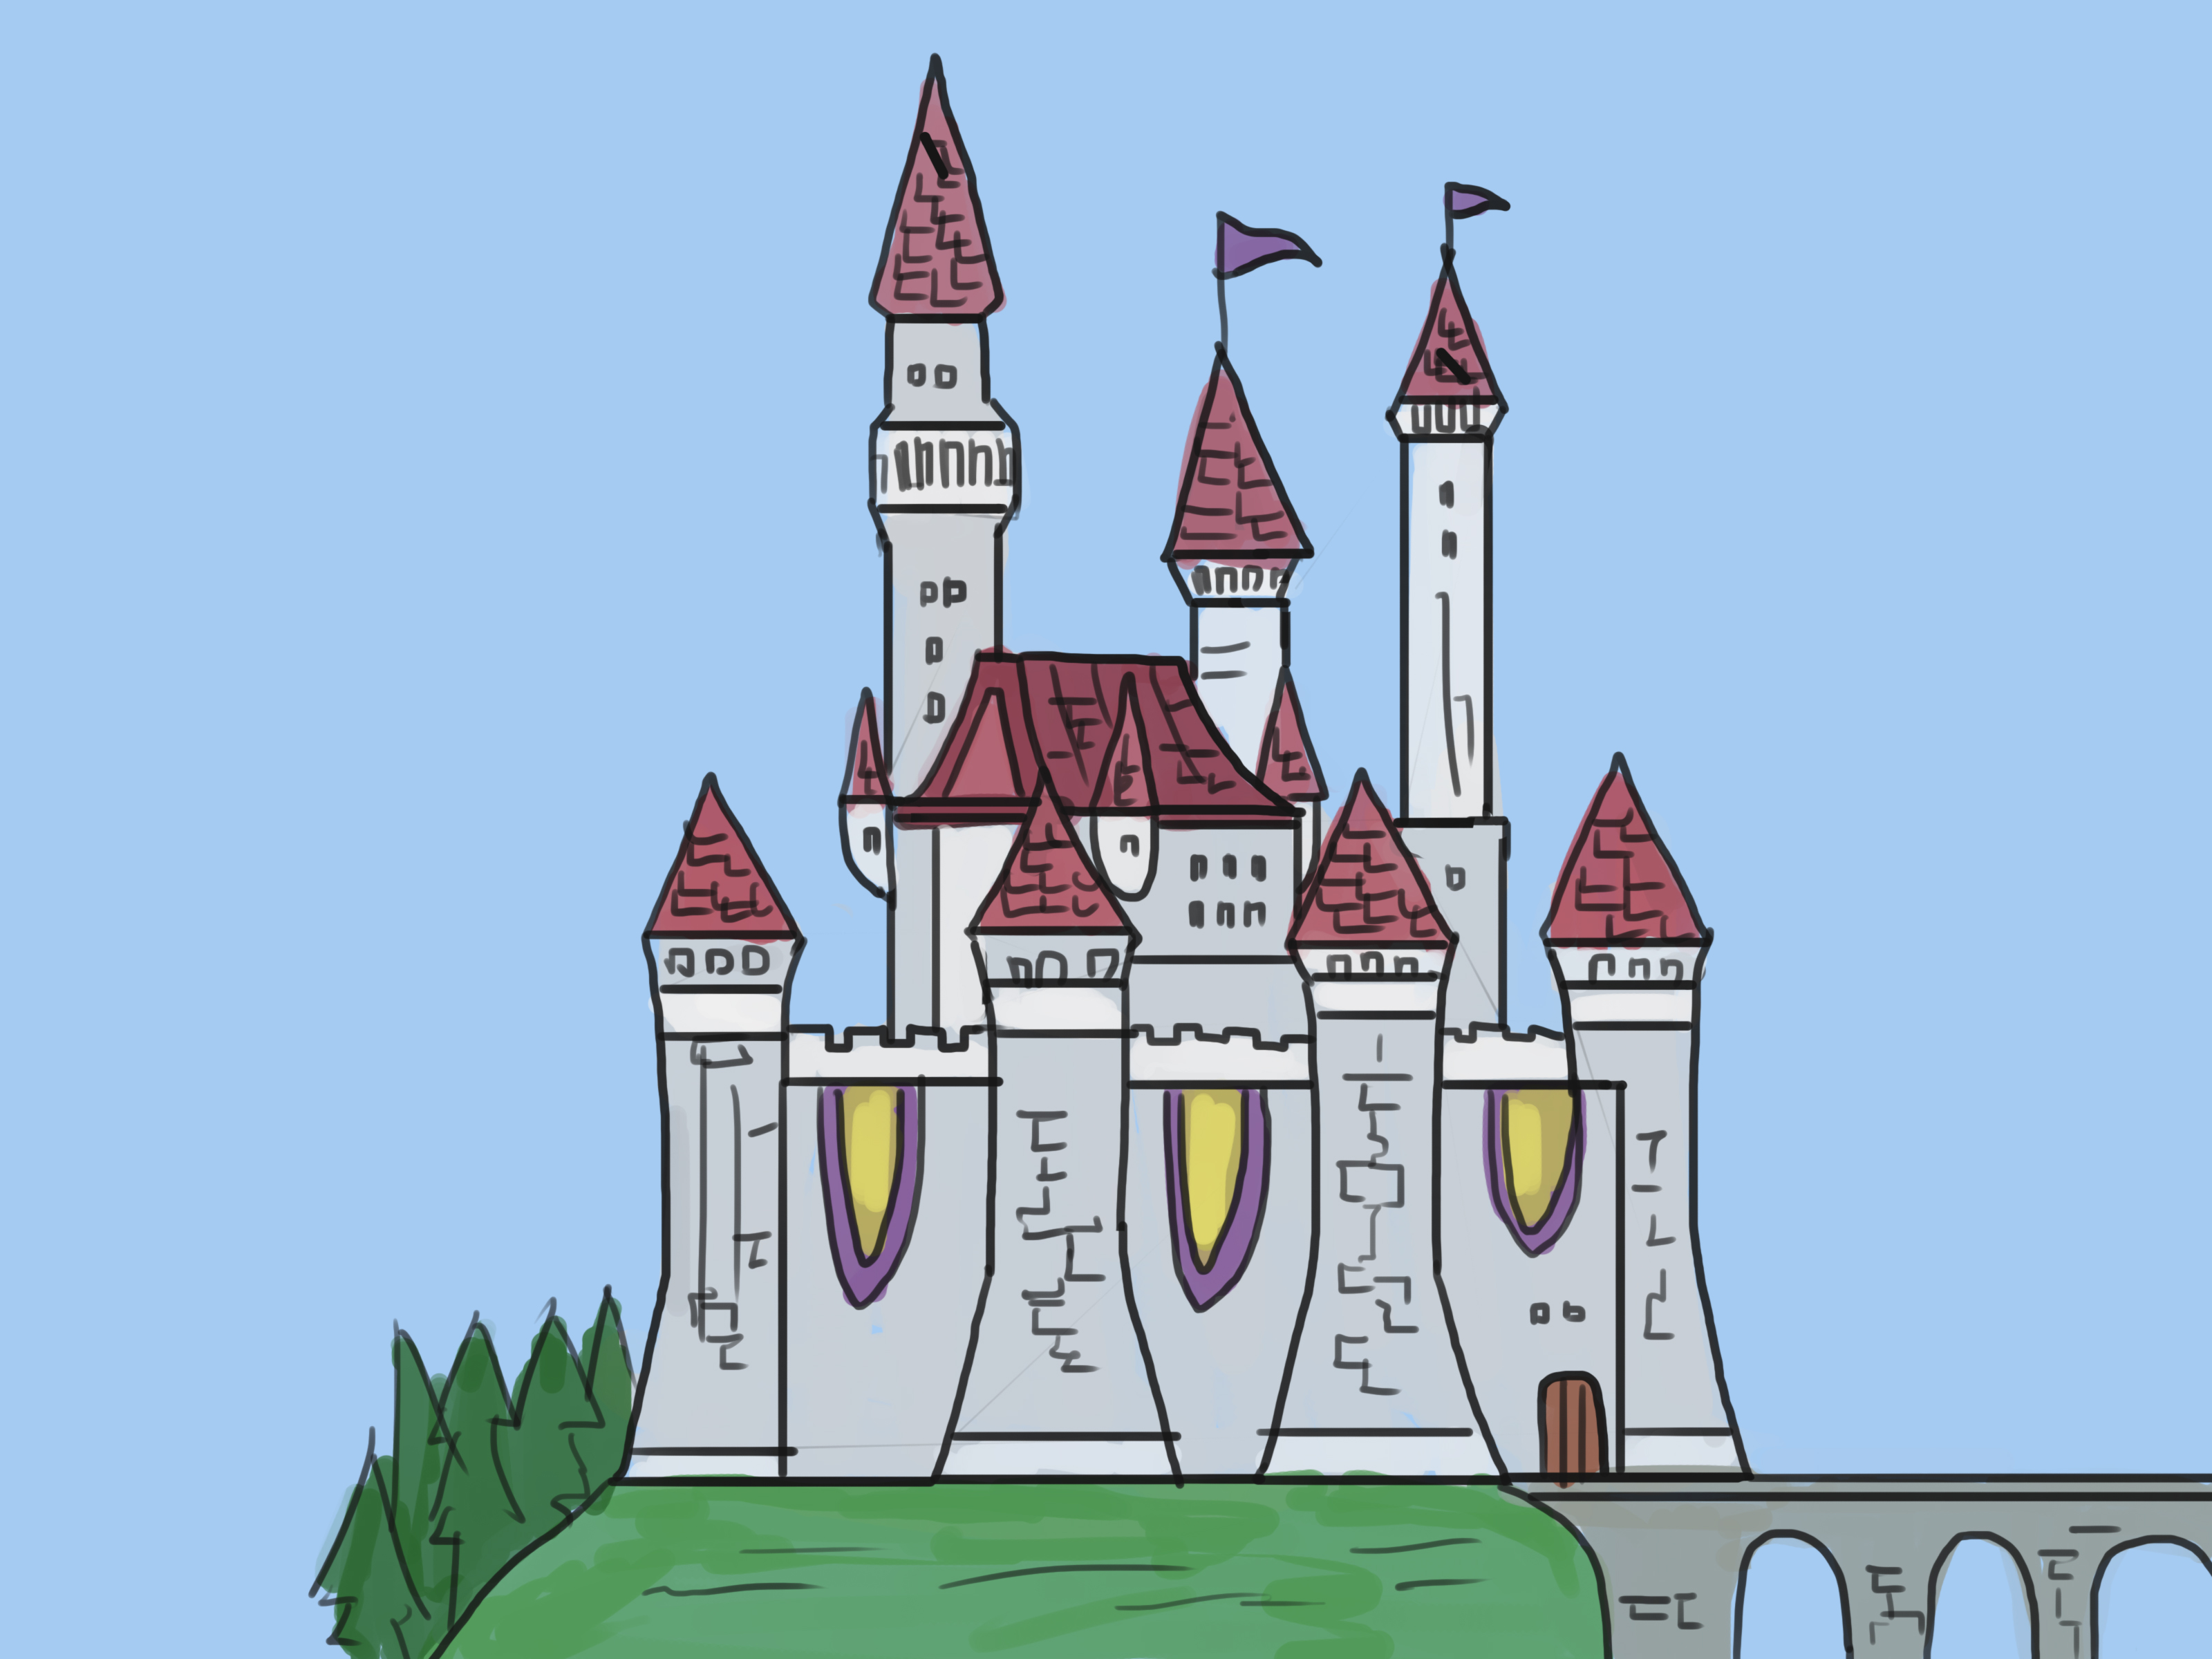 4 Ways to Draw a Castle - wikiHow